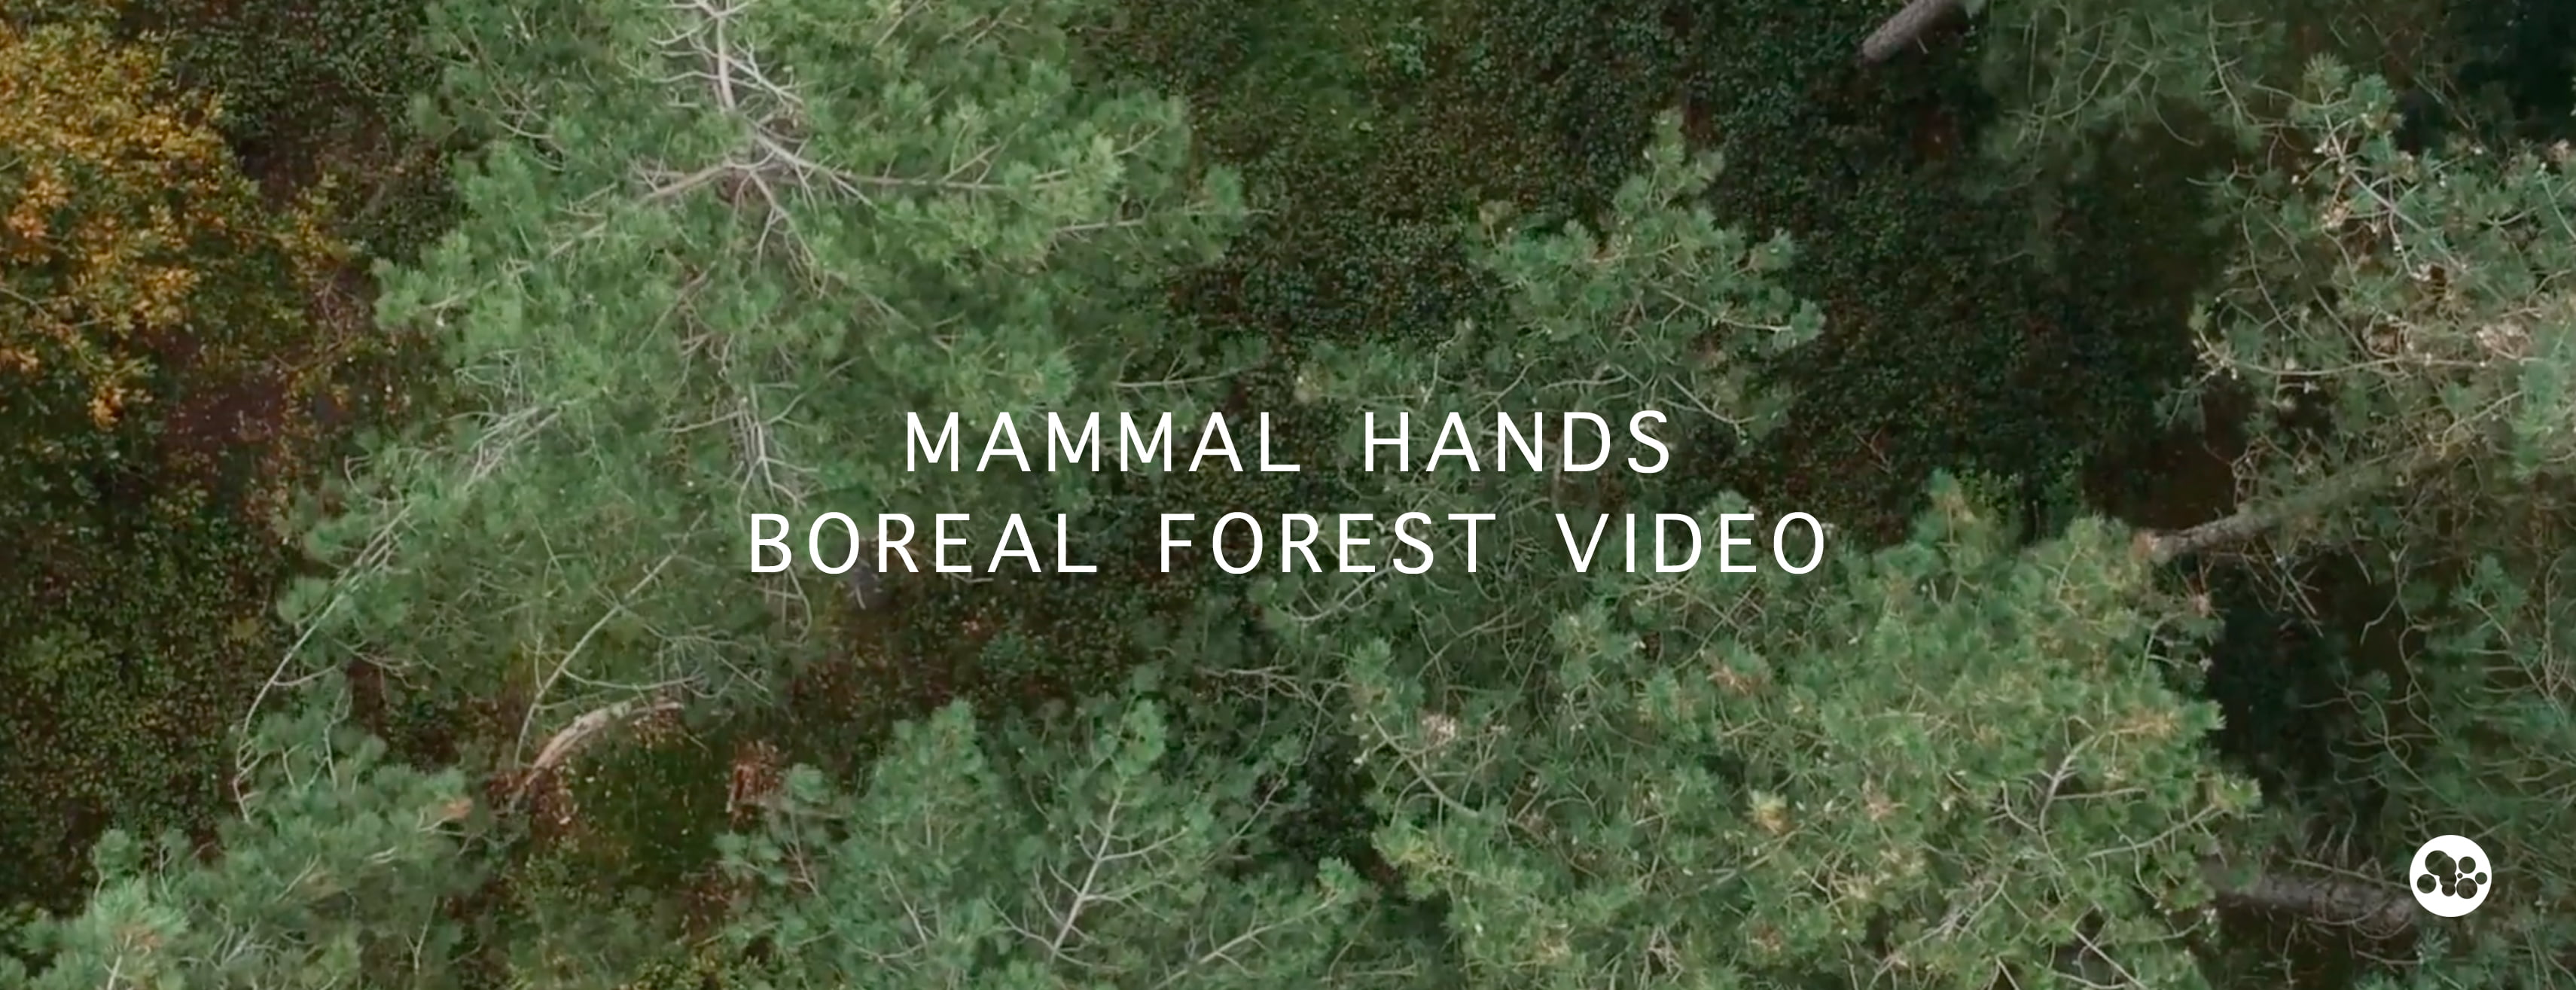 1. Mammal Hands Boreal Forest Facebook Banner